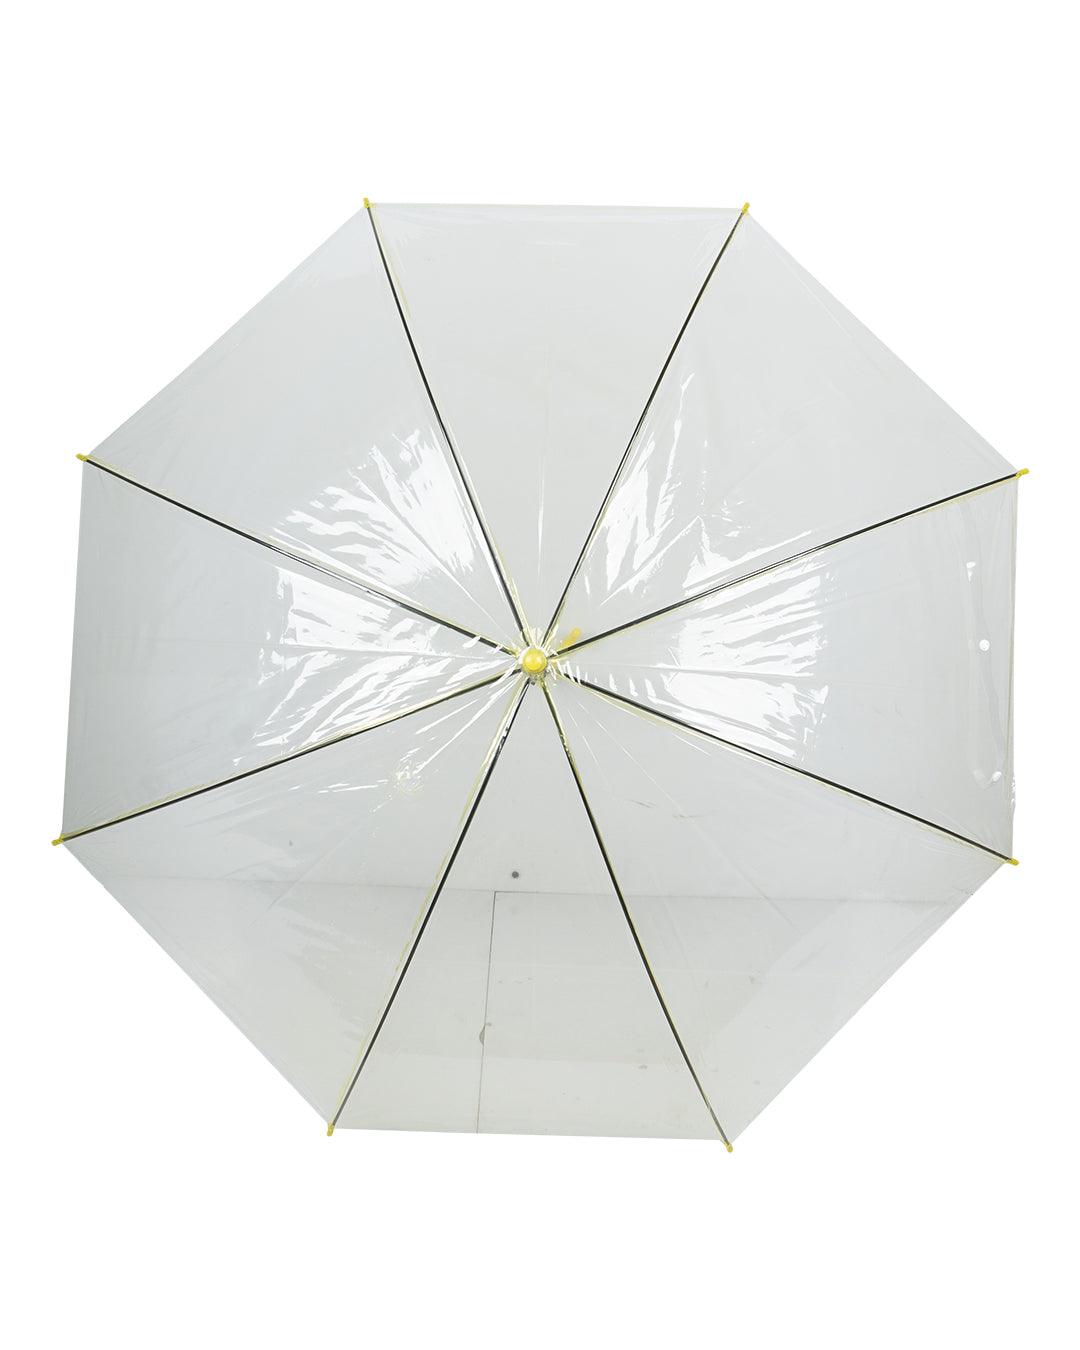 Kids Umbrella, Yellow, Plastic - MARKET 99